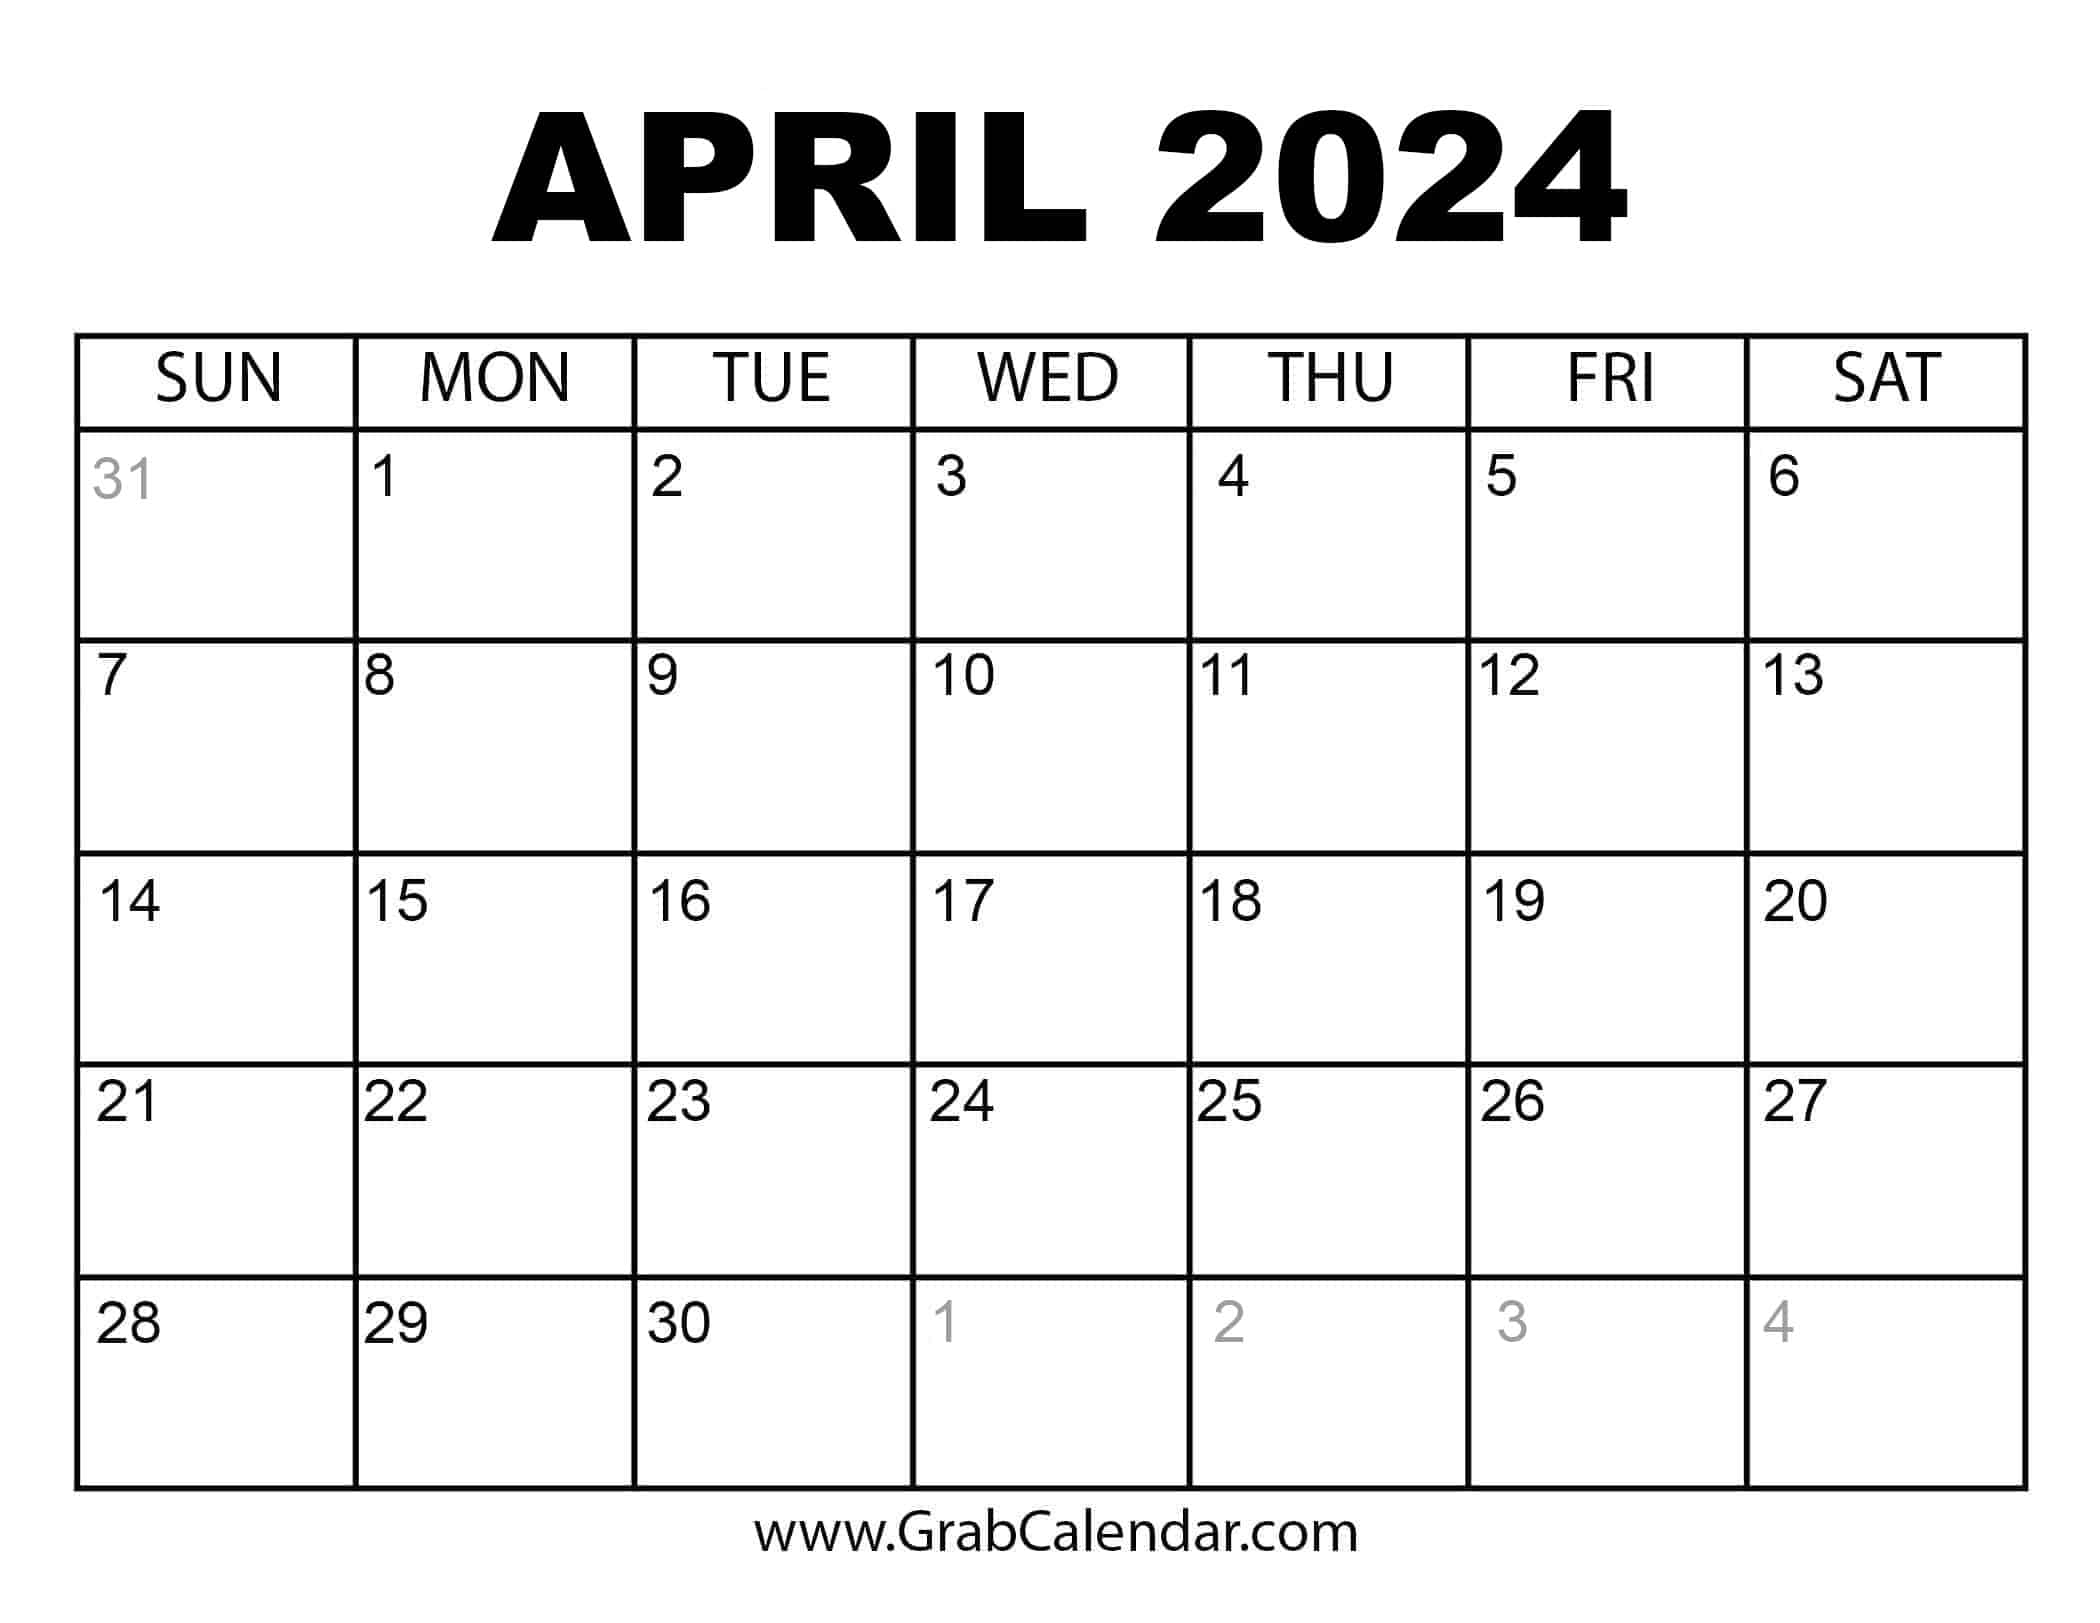 Printable April 2024 Calendar intended for Blank Calendar 2024 April